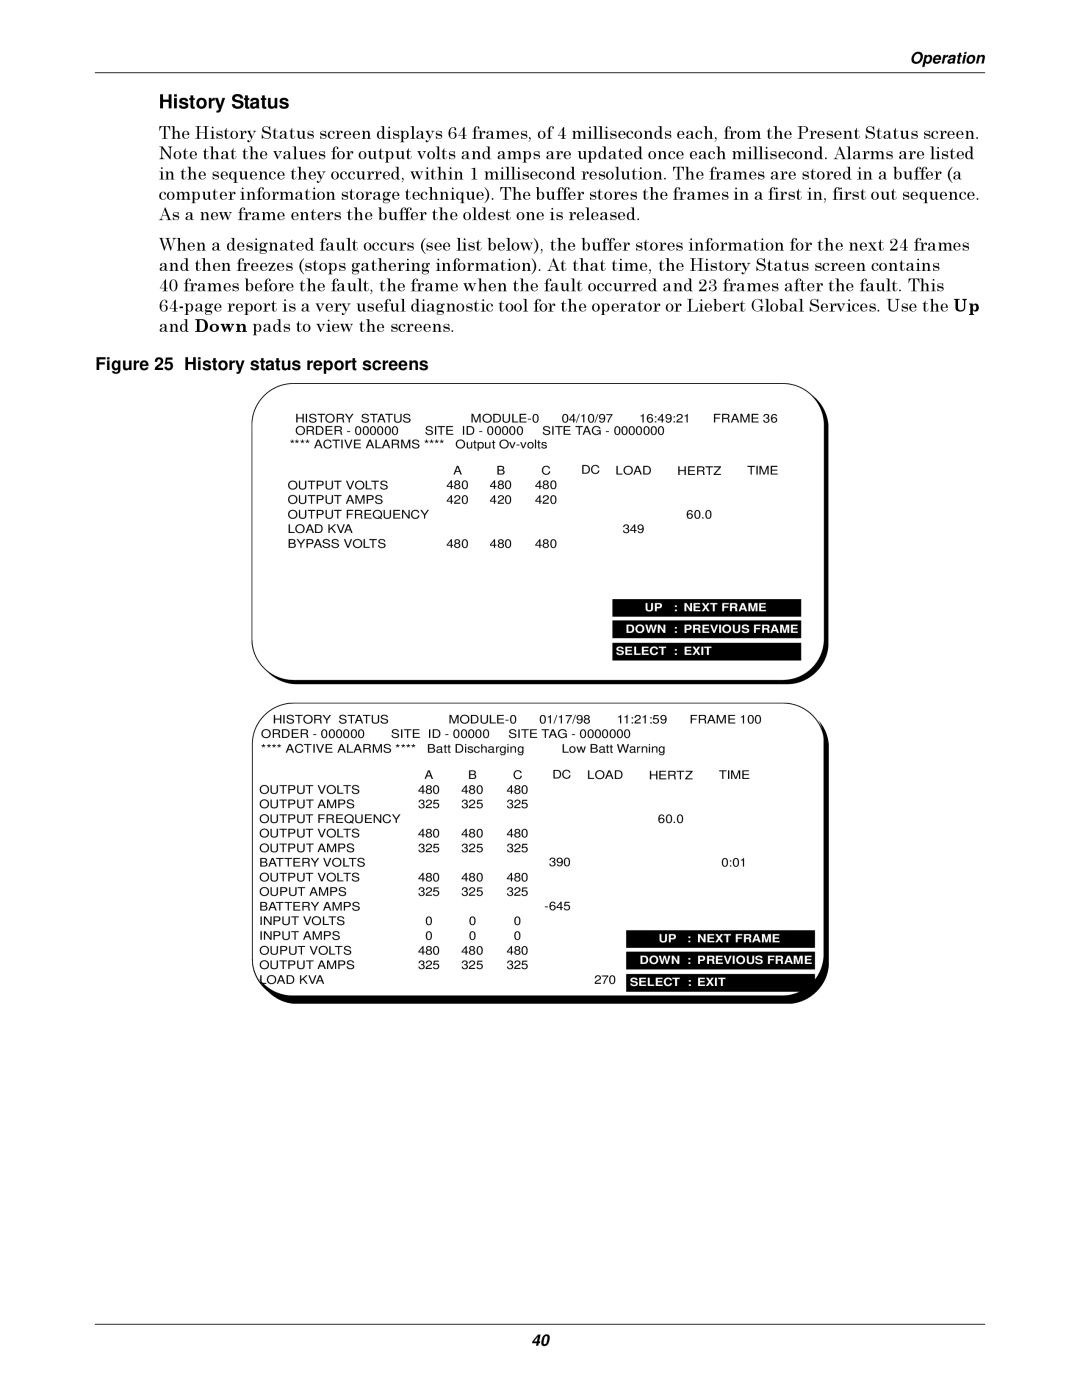 Emerson Series 610 manual History Status, History status report screens 